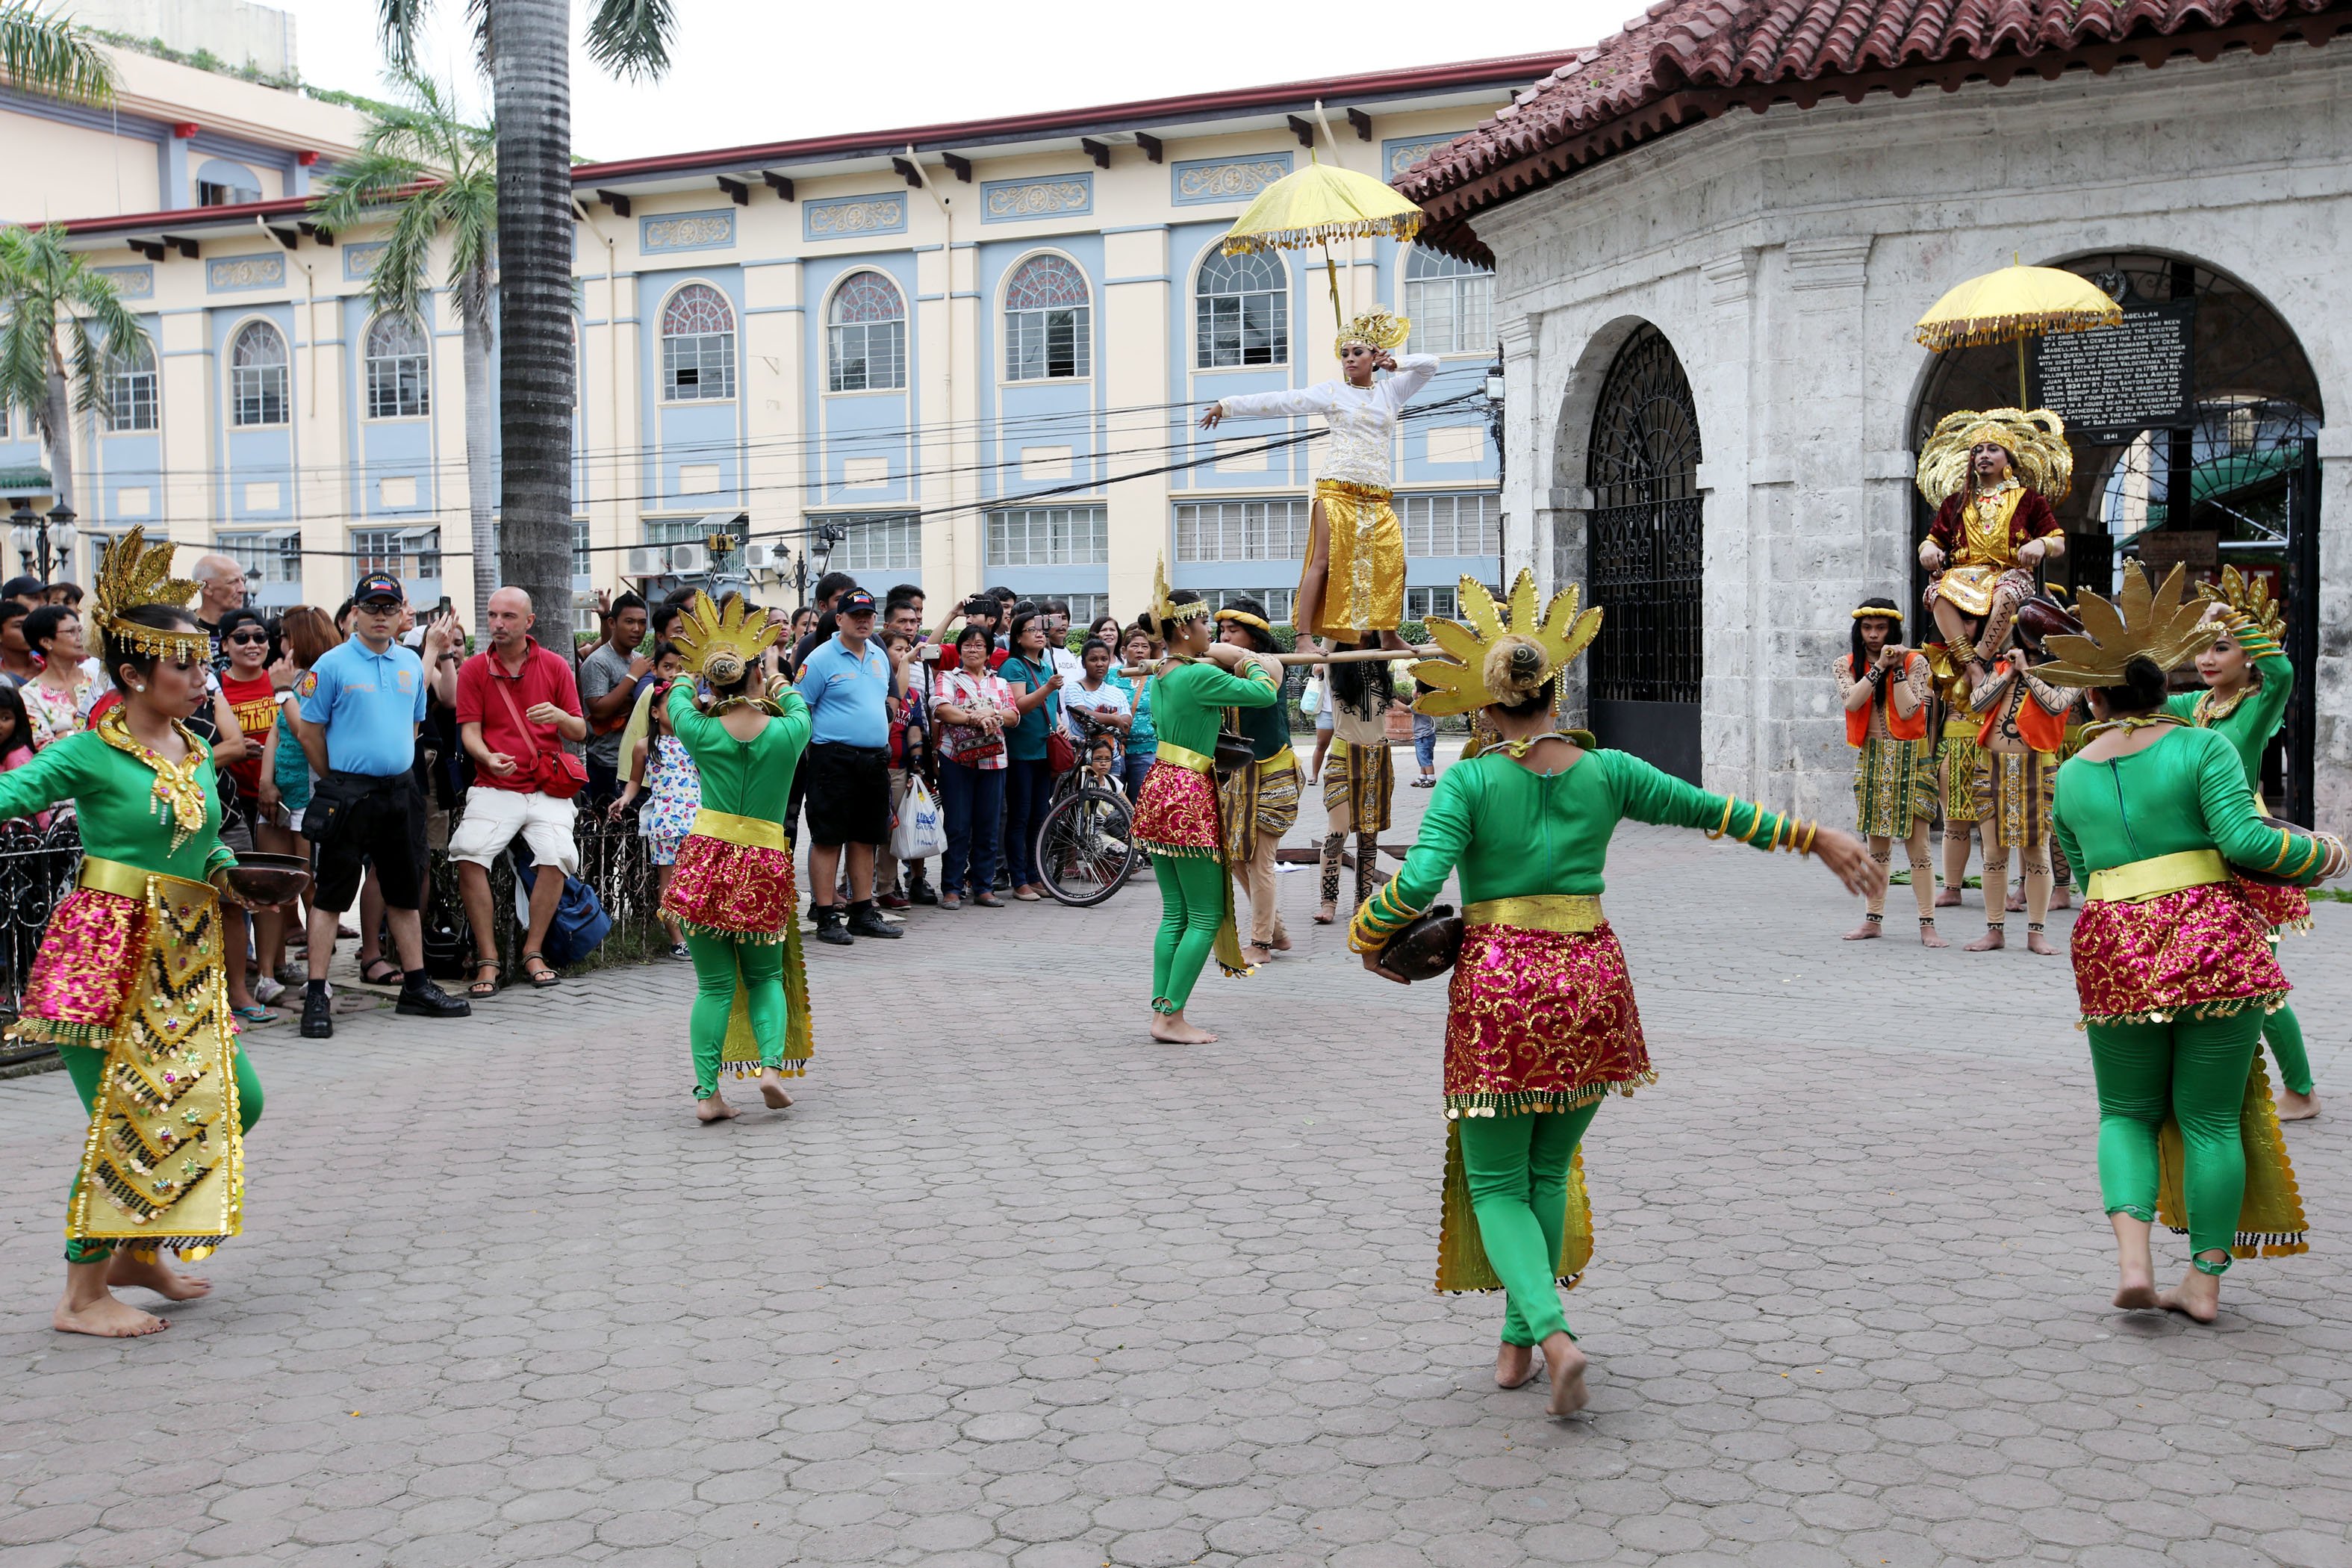 Cultural performance at Plaza Sugbu